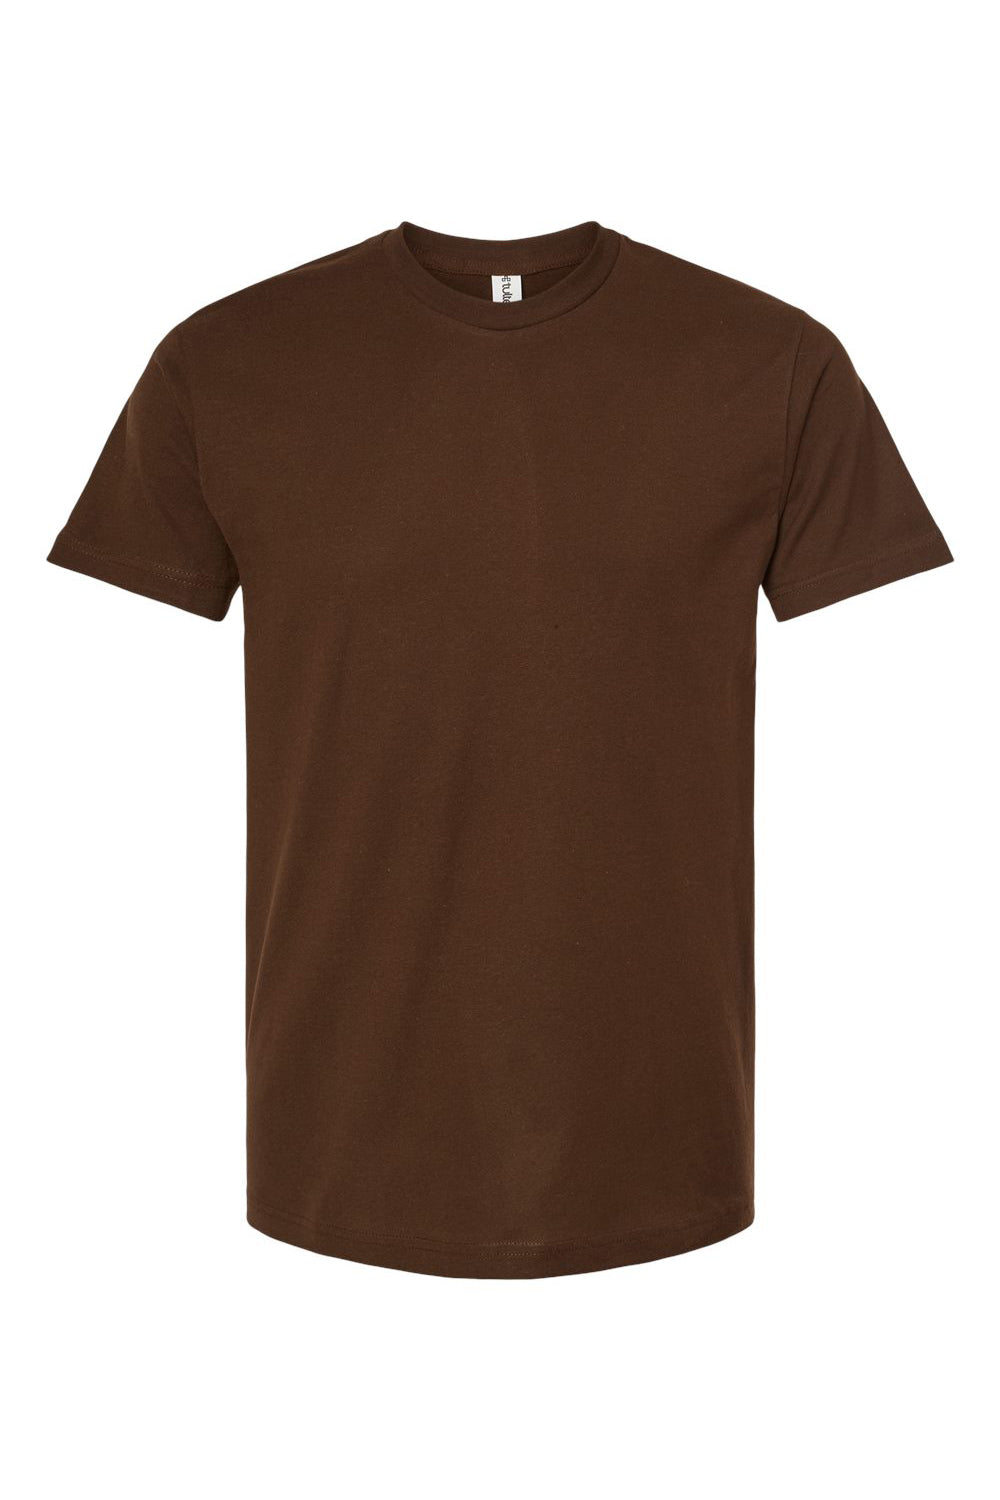 Tultex 202 Mens Fine Jersey Short Sleeve Crewneck T-Shirt Brown Flat Front